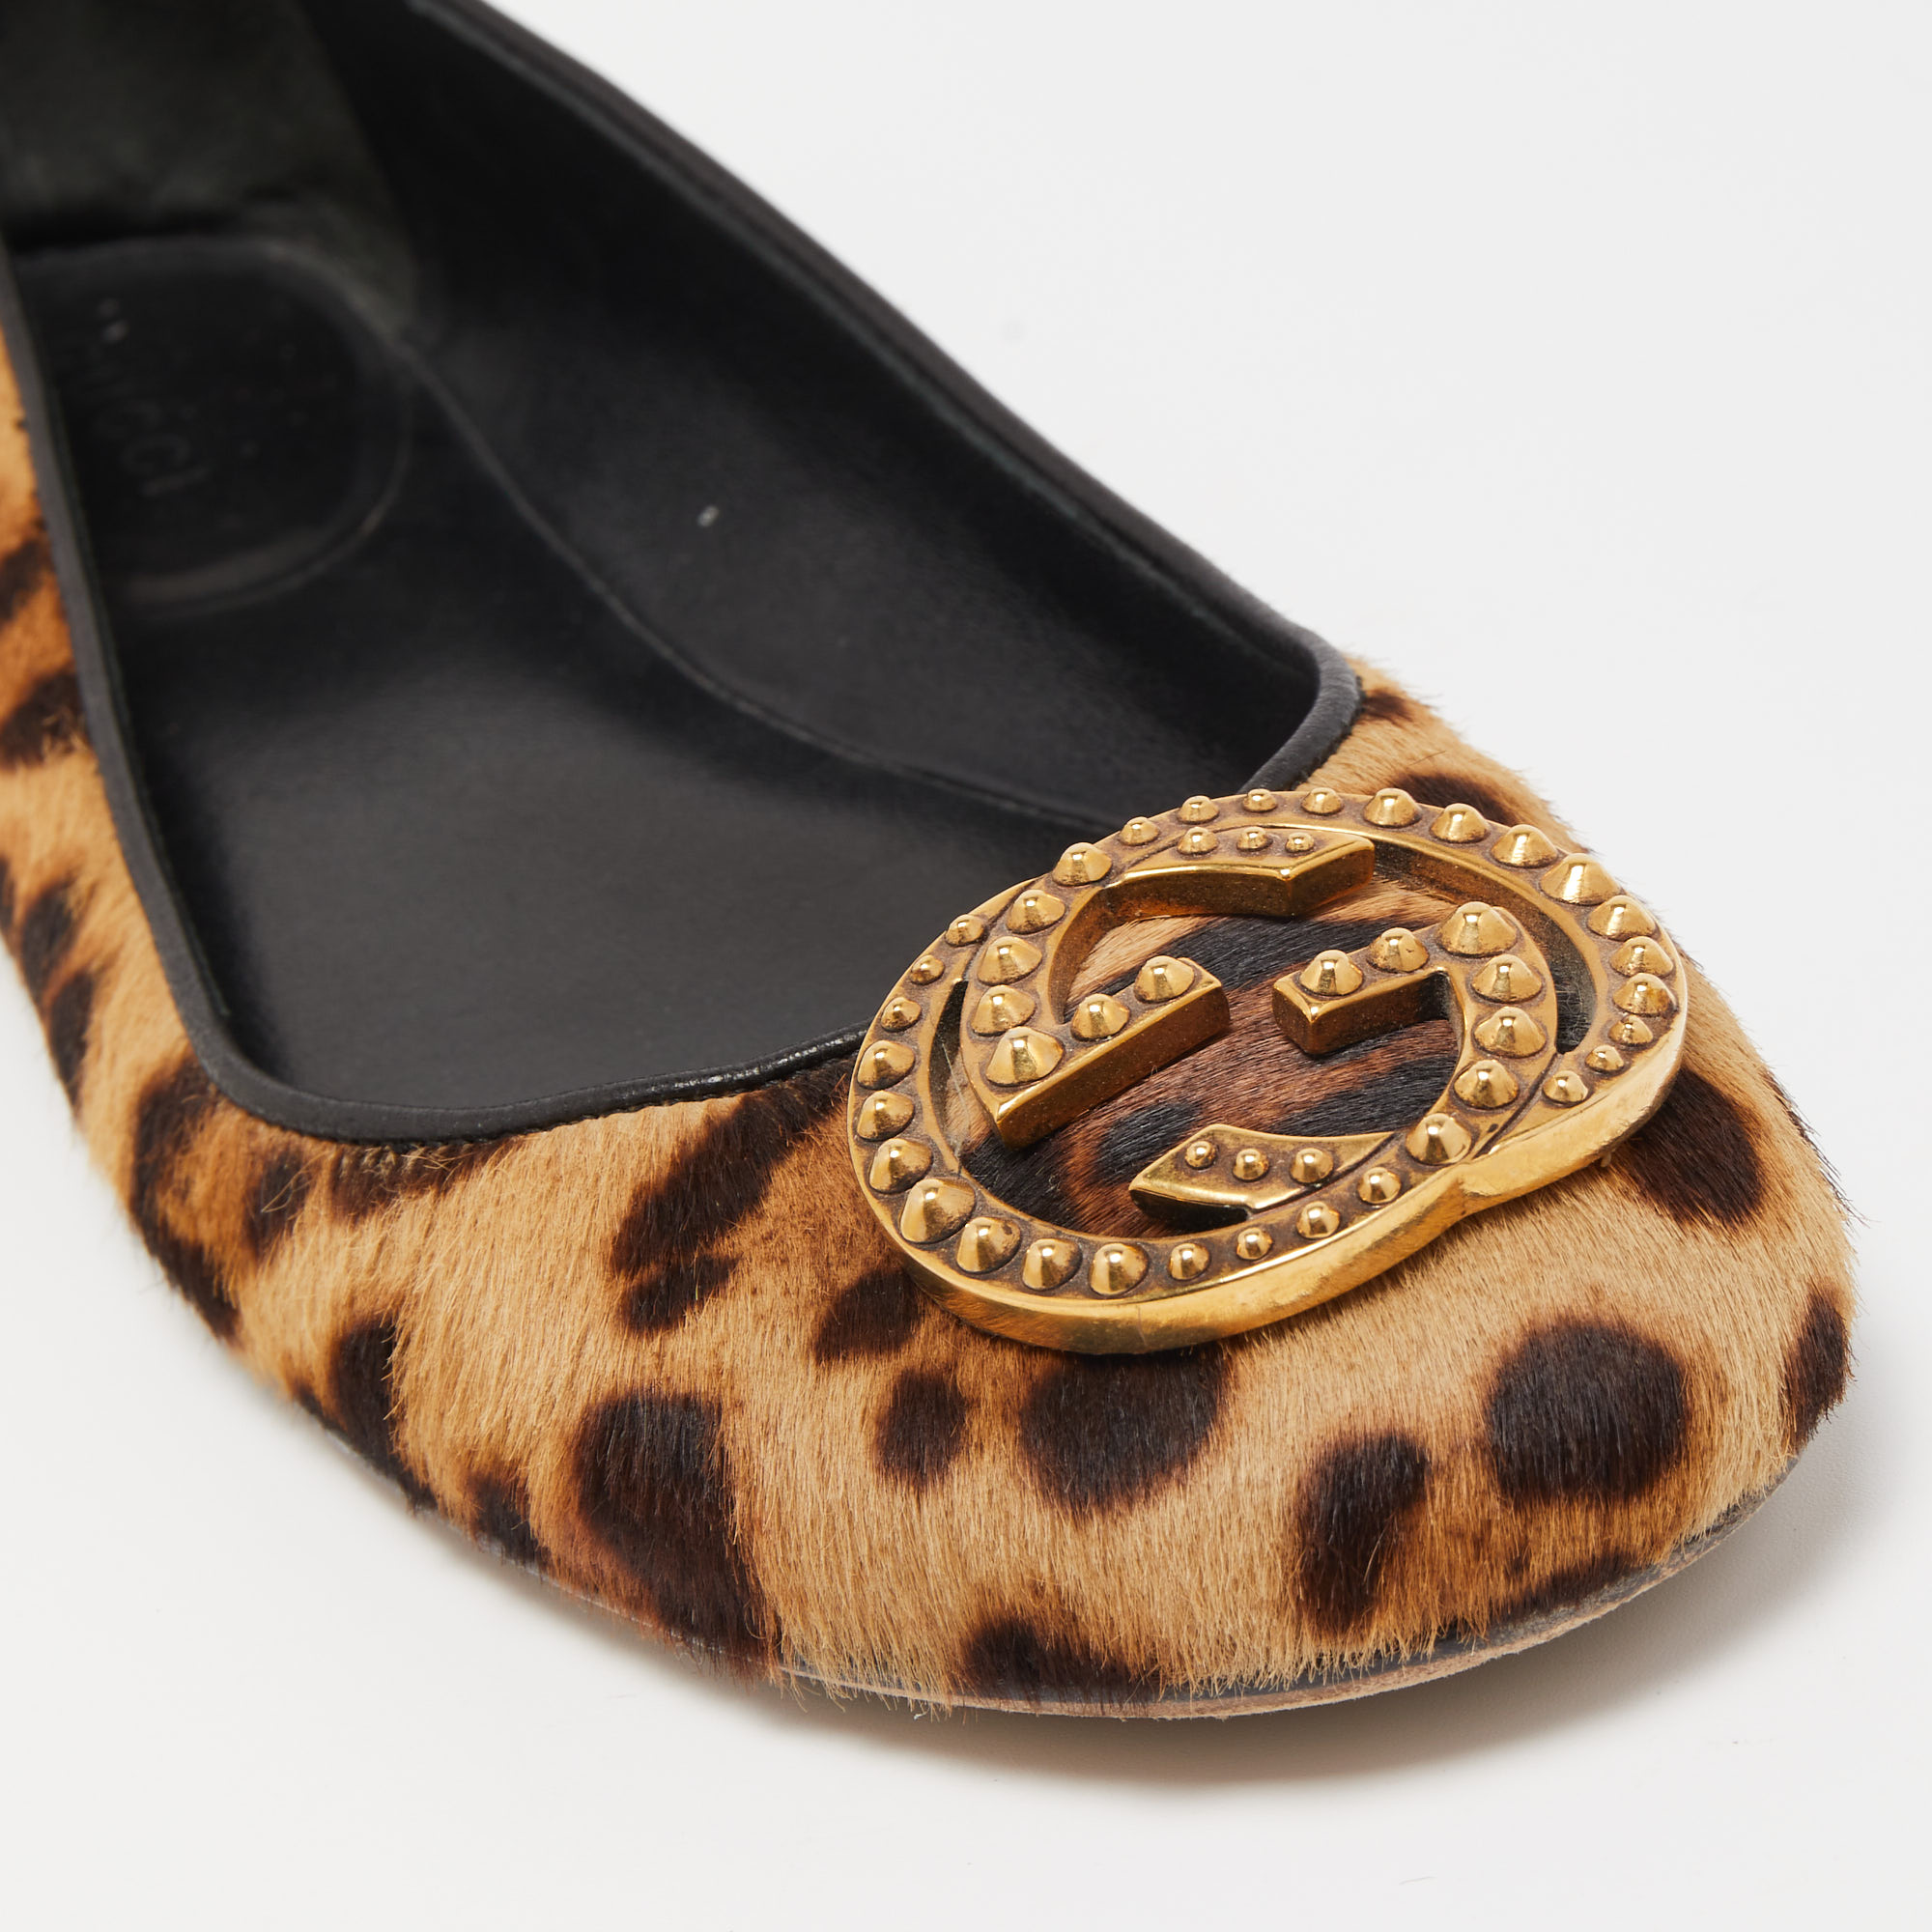 Gucci Beige/Brown Leopard Print Calf Hair Studded Interlocking G Ballet Flats Size 37